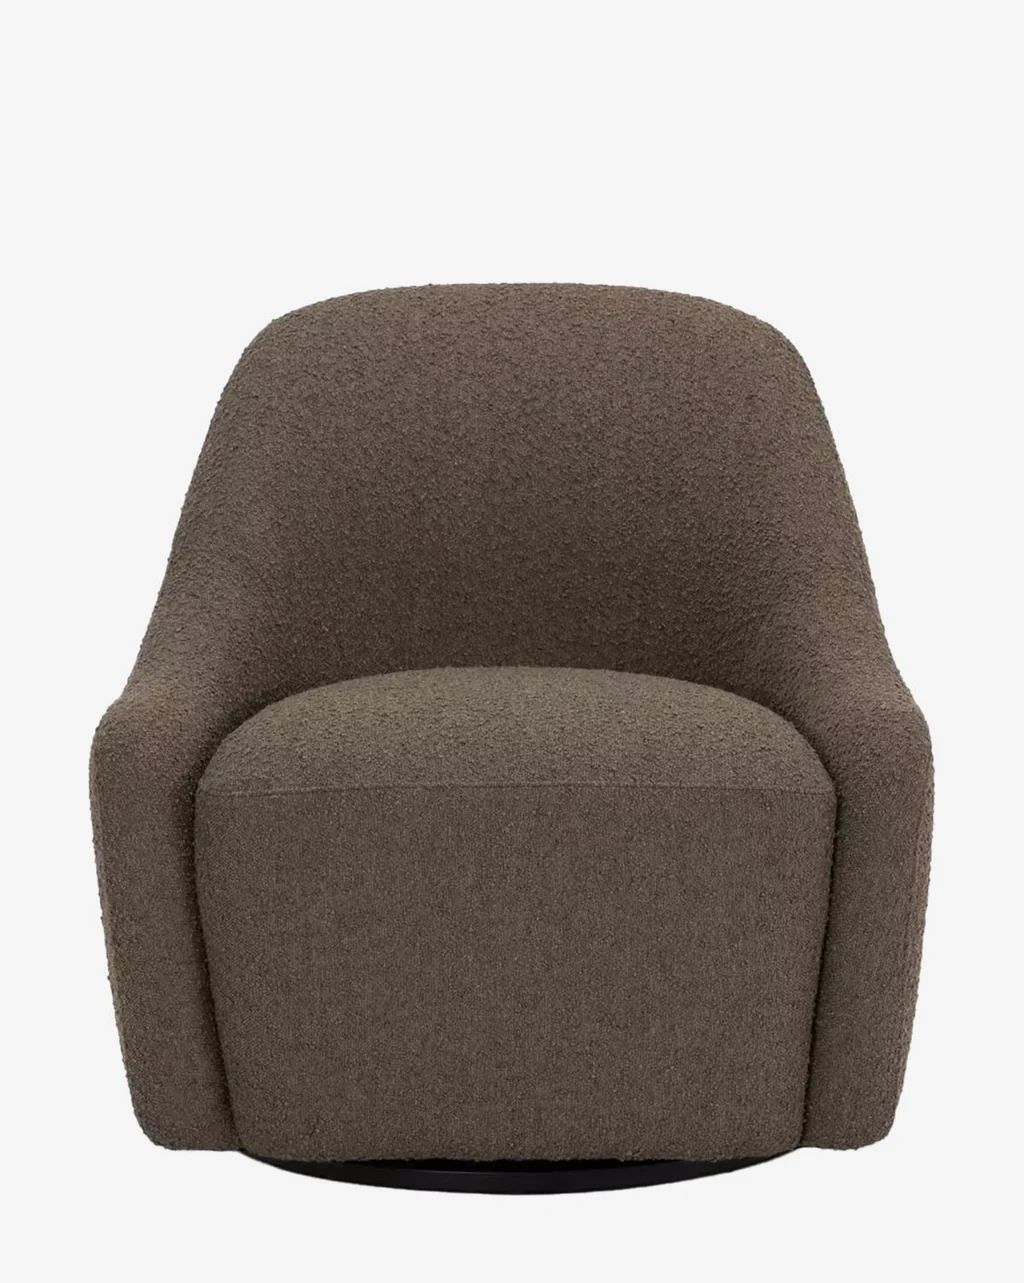 Noelani Swivel Chair | McGee & Co. (US)